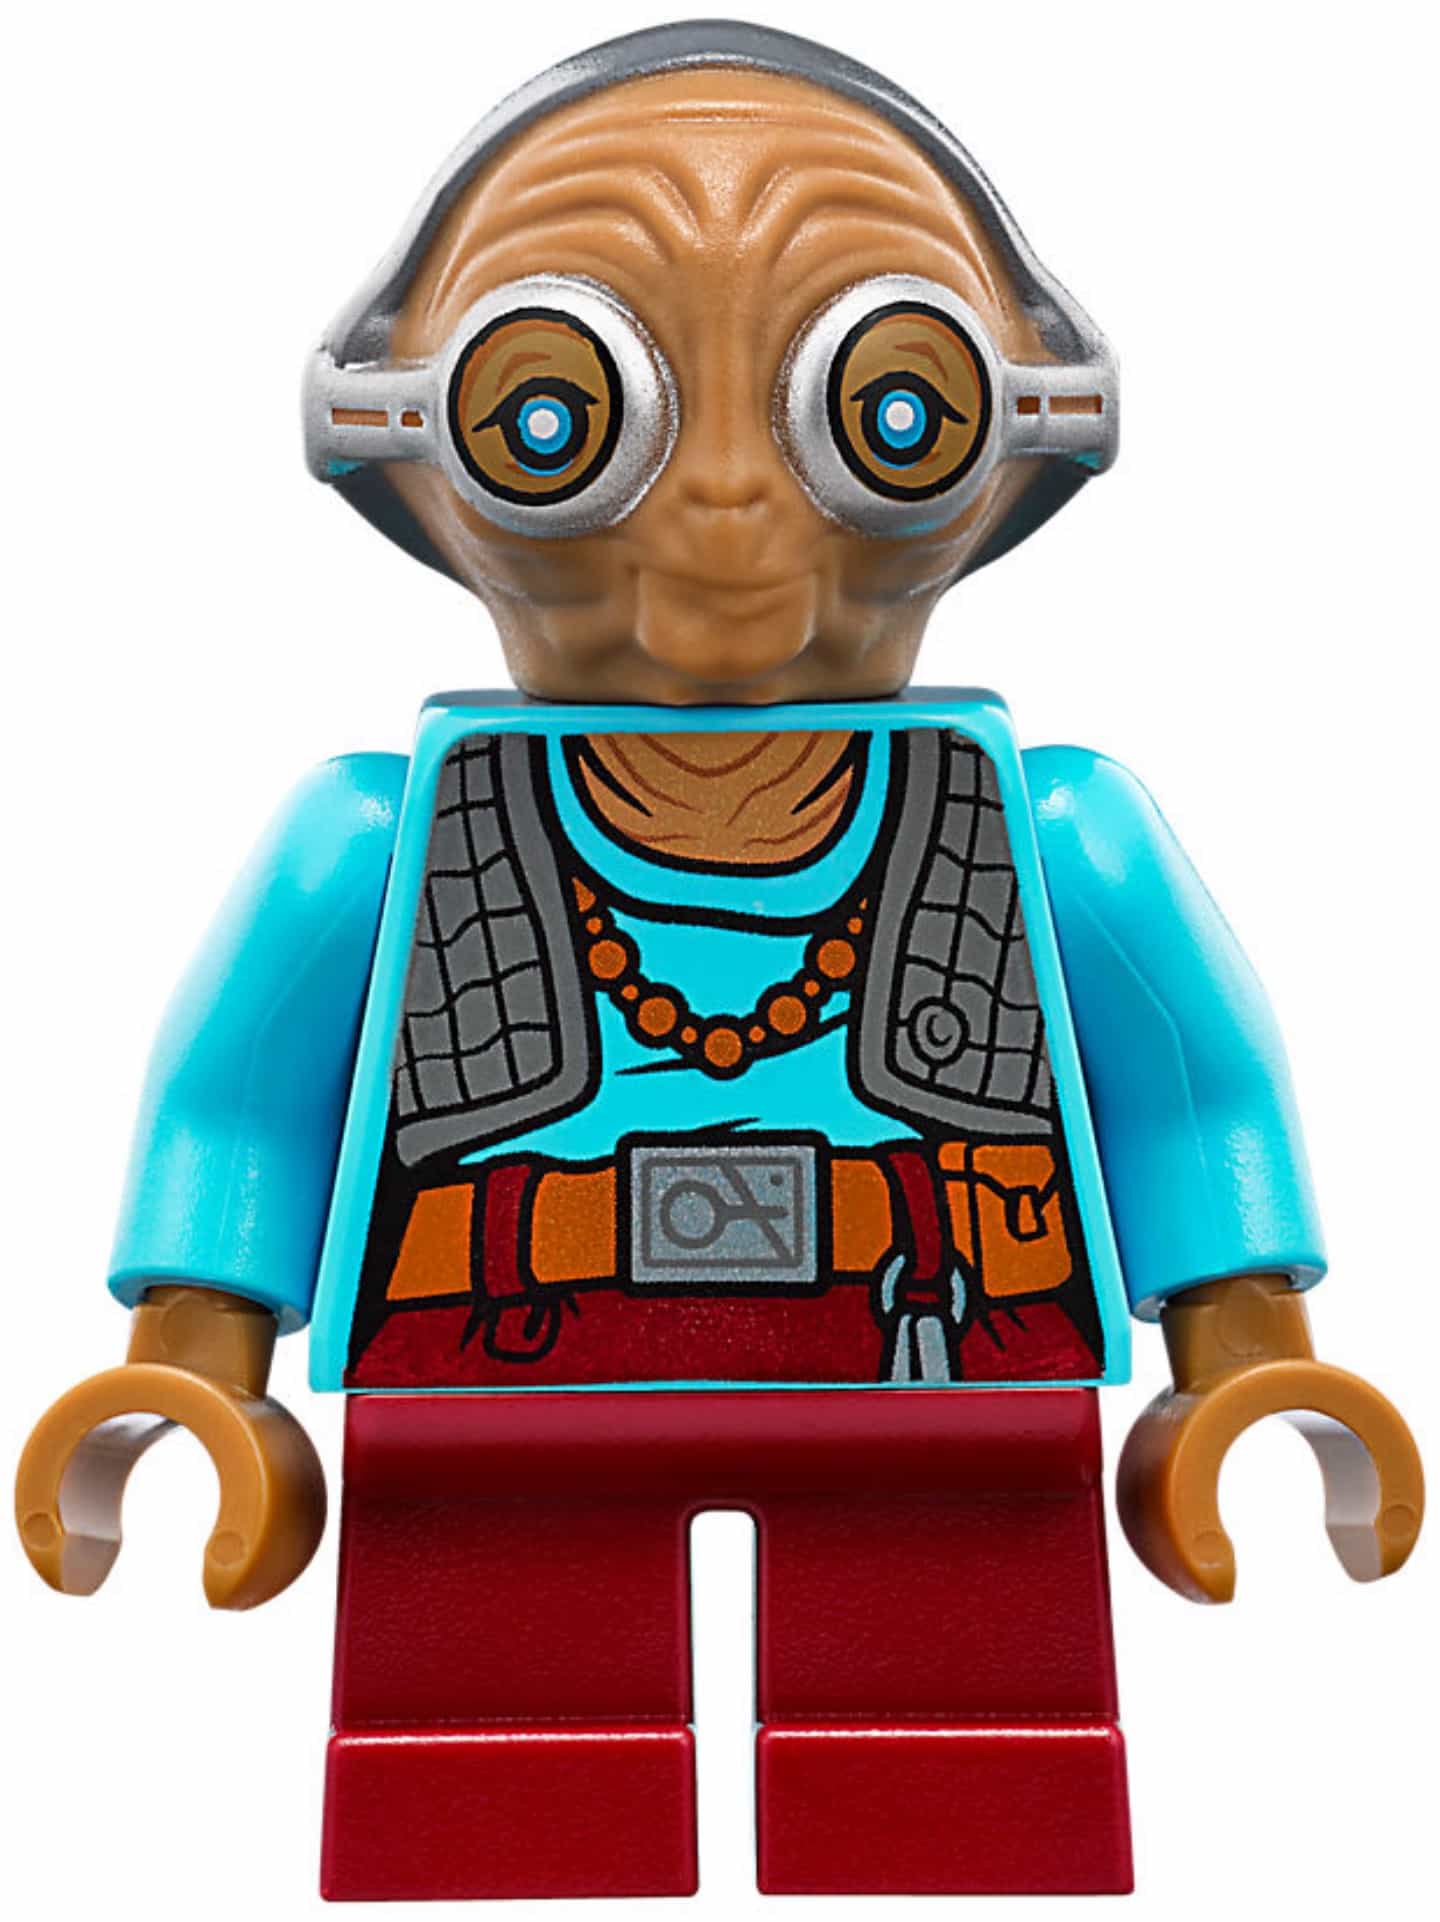 LEGO Star Wars Minifigure Review - 75139 - Powerofthebrick